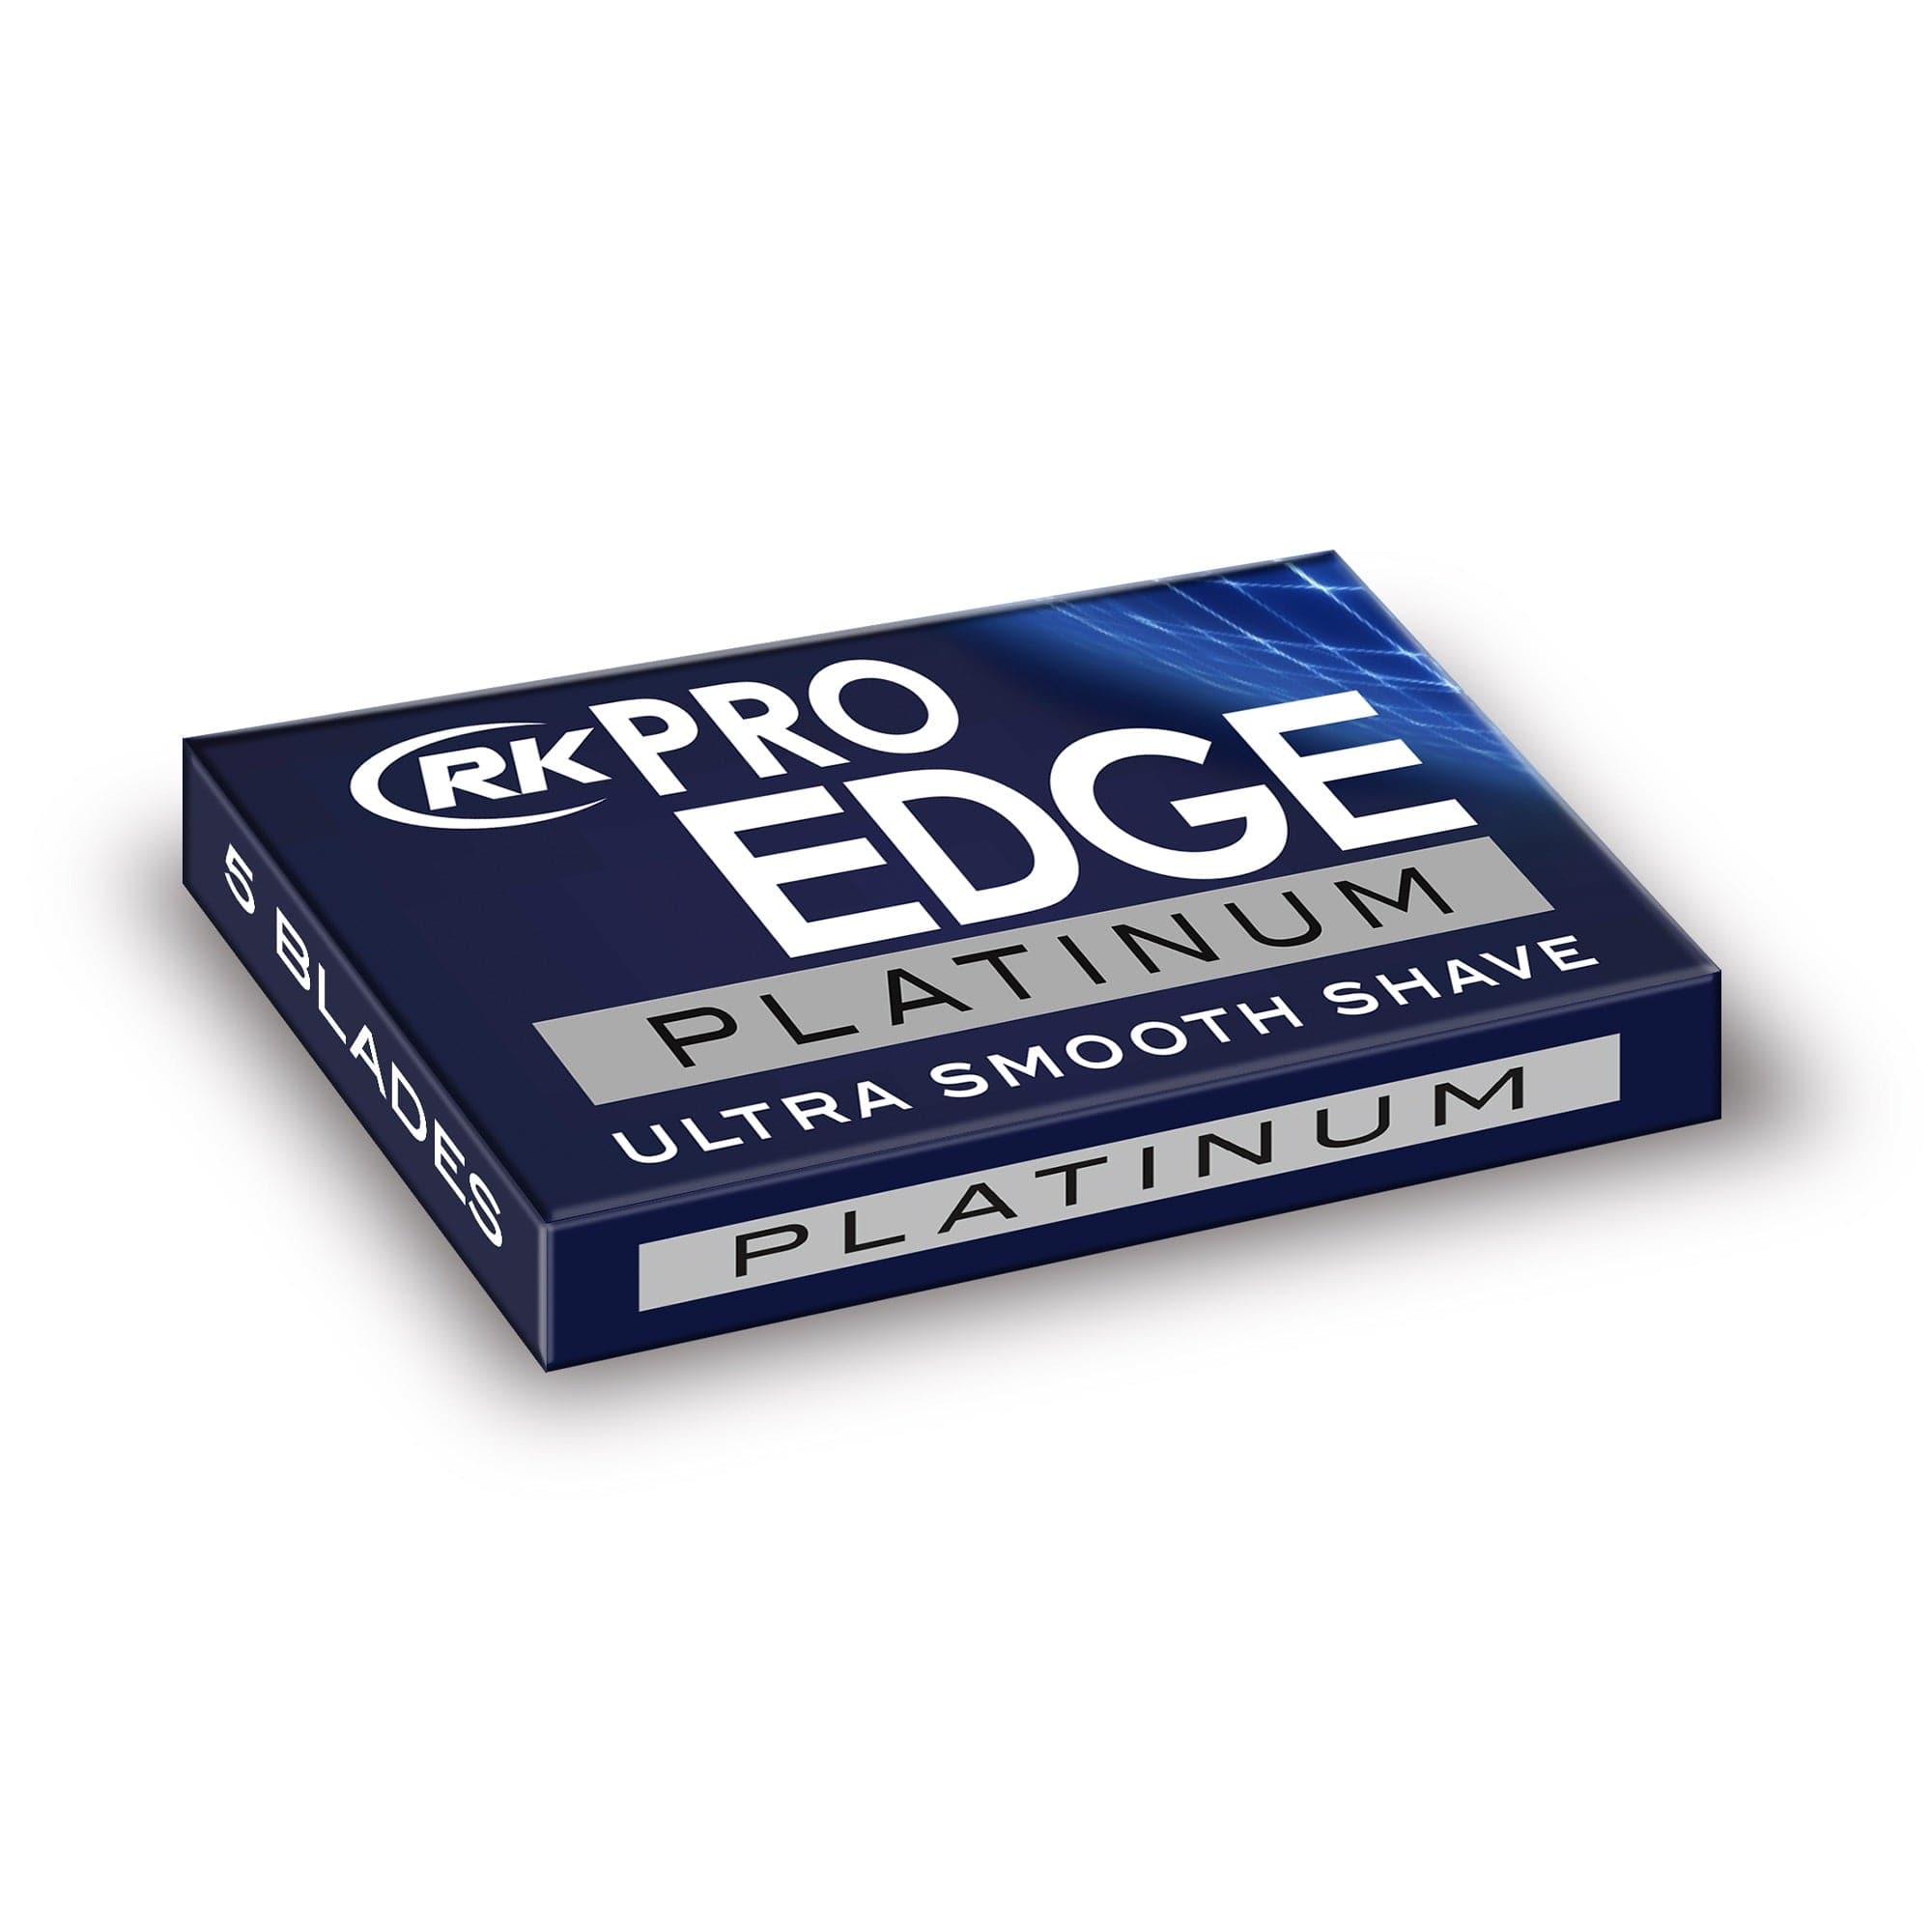 RK Pro Edge - Platinum Super Stainless Double Edge Razor Blade Sleeve 20x5pcs